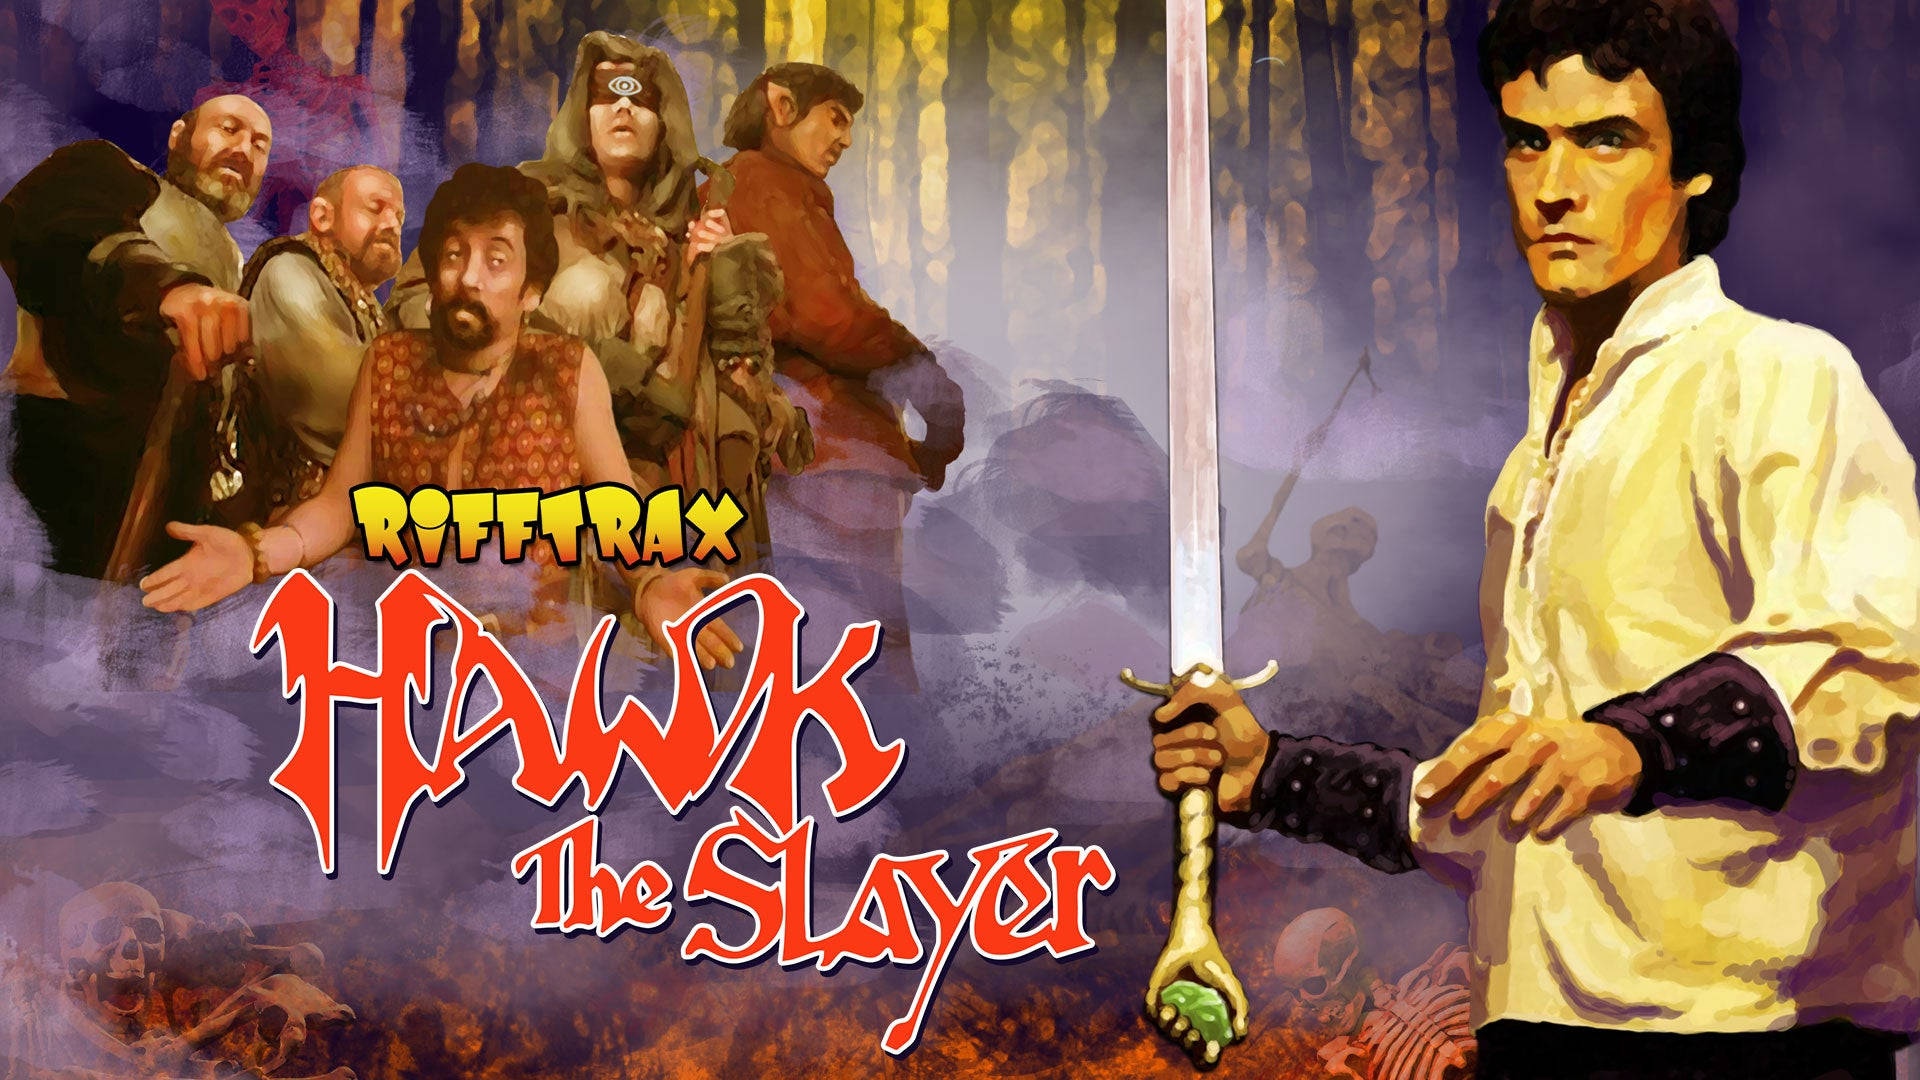 Jack Palance Rifftrax Hawk the Slayer plakat vægtegning Wallpaper